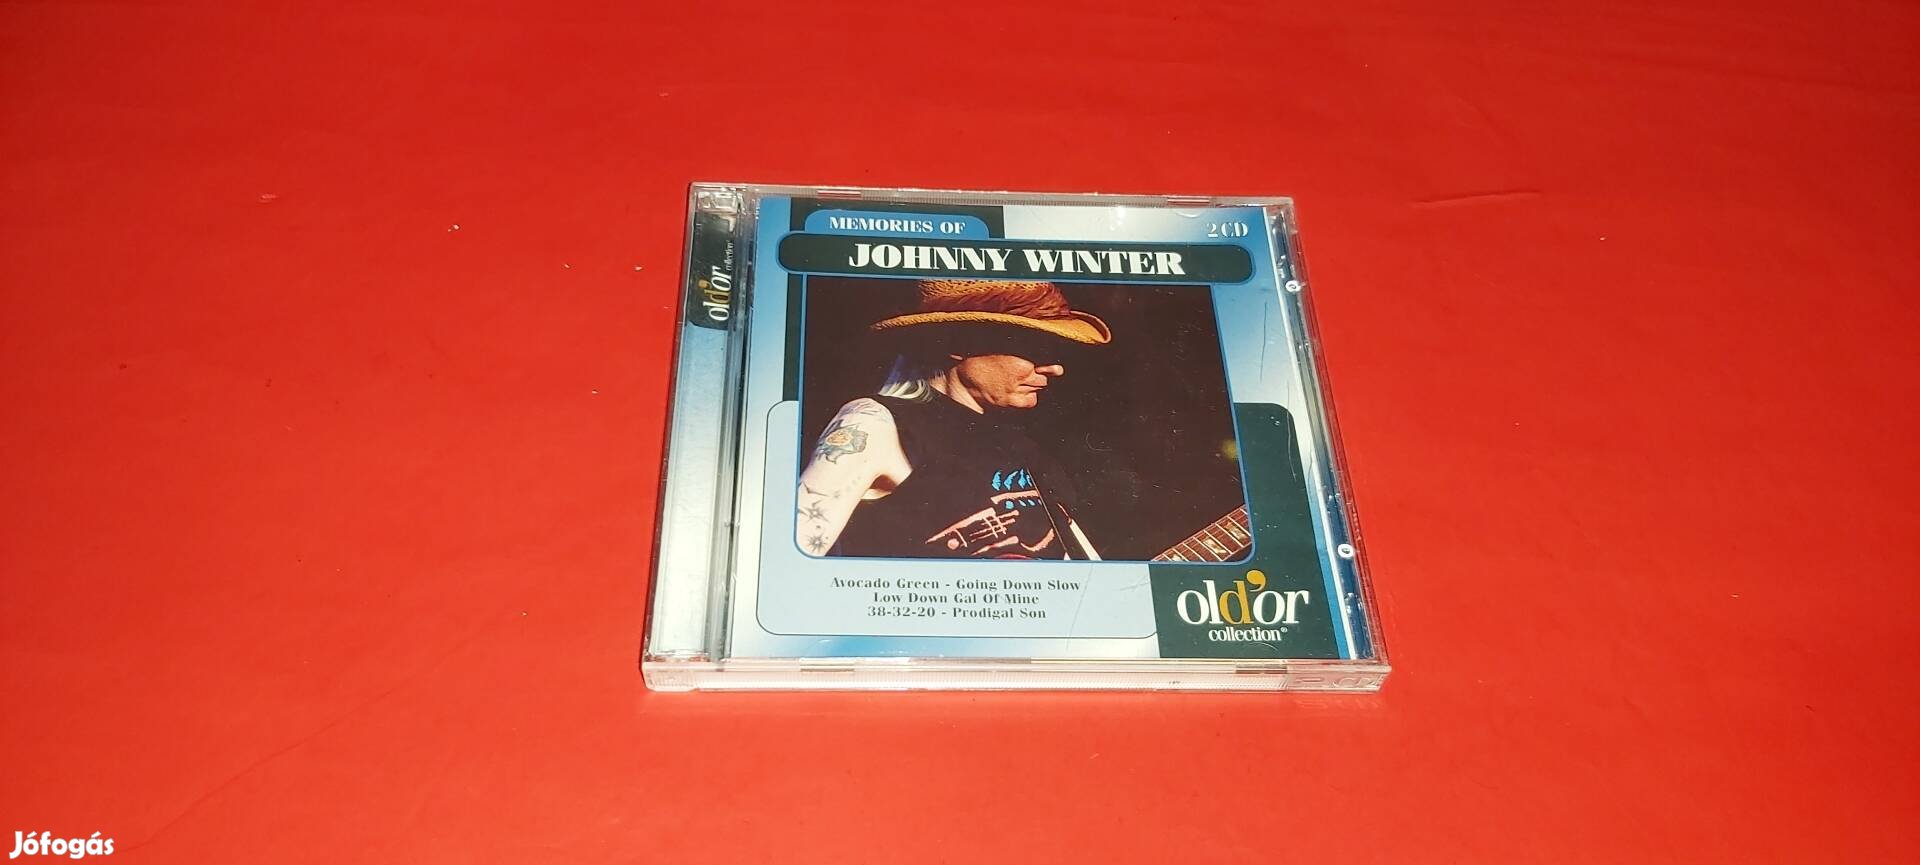 Johnny Winter Memories dupla Cd 2000